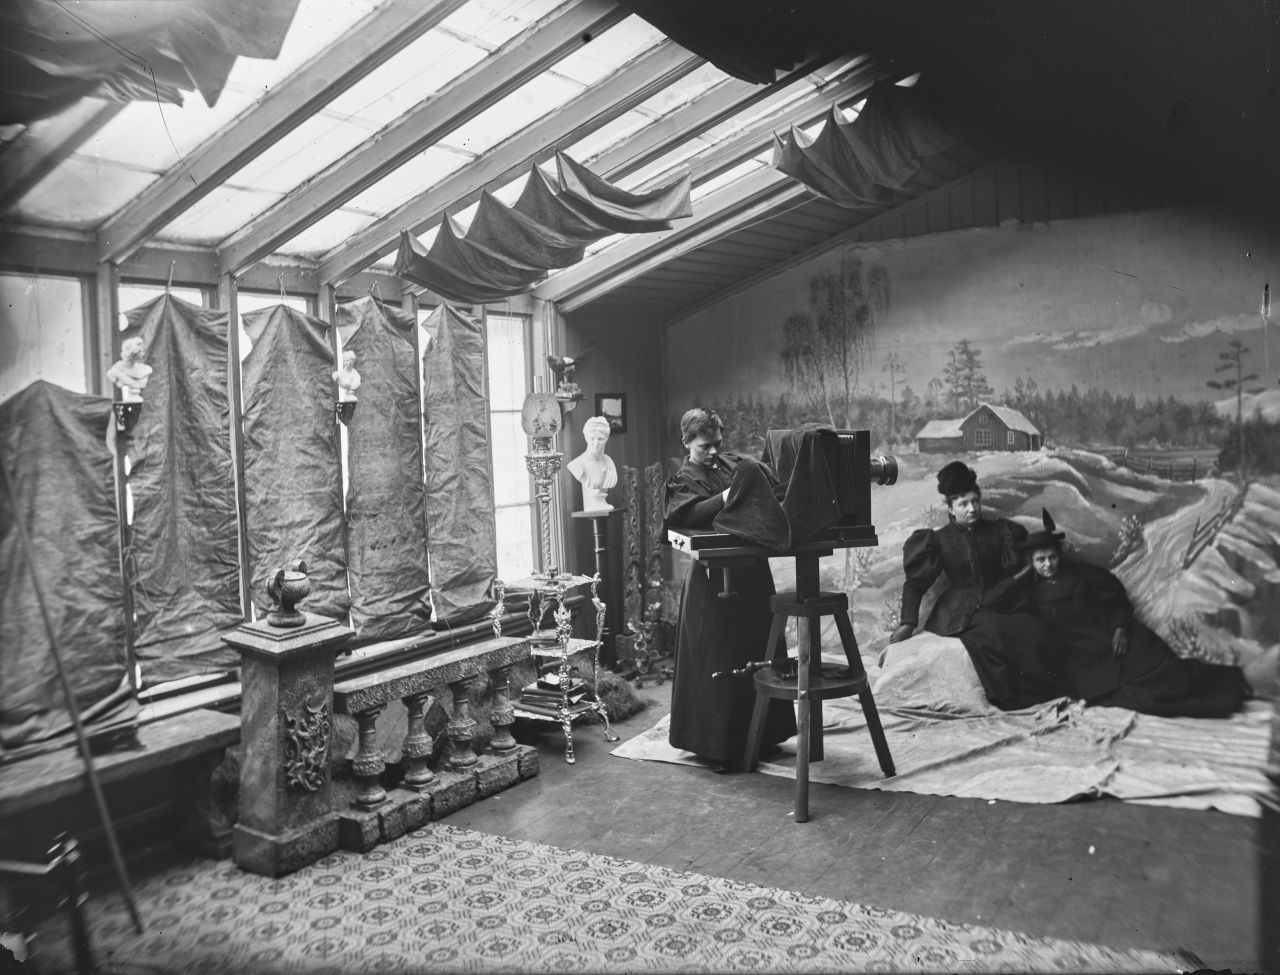 Berg & Høeg, In the studio: Marie operating the camera, Bolette photographing the scene, 1894-1903.